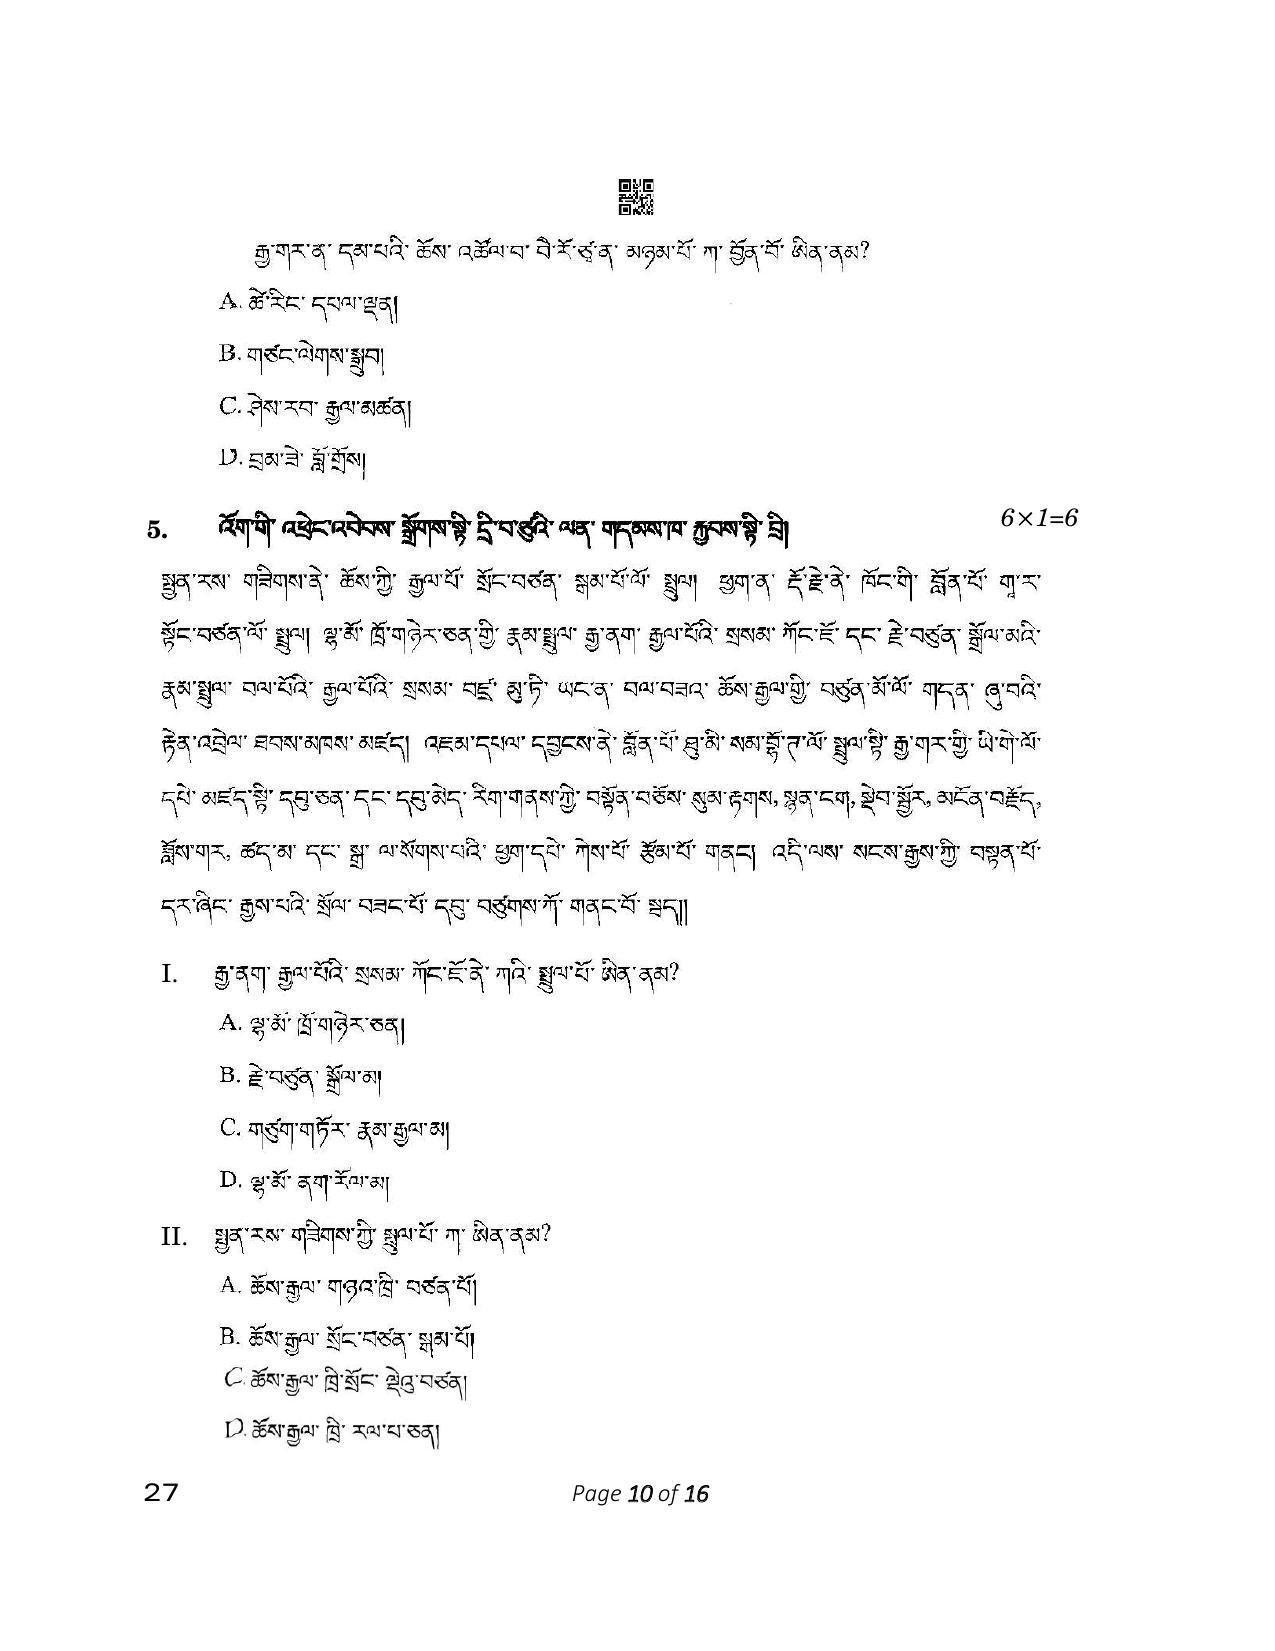 CBSE Class 12 27_Bhutia 2023 2023 Question Paper - Page 10